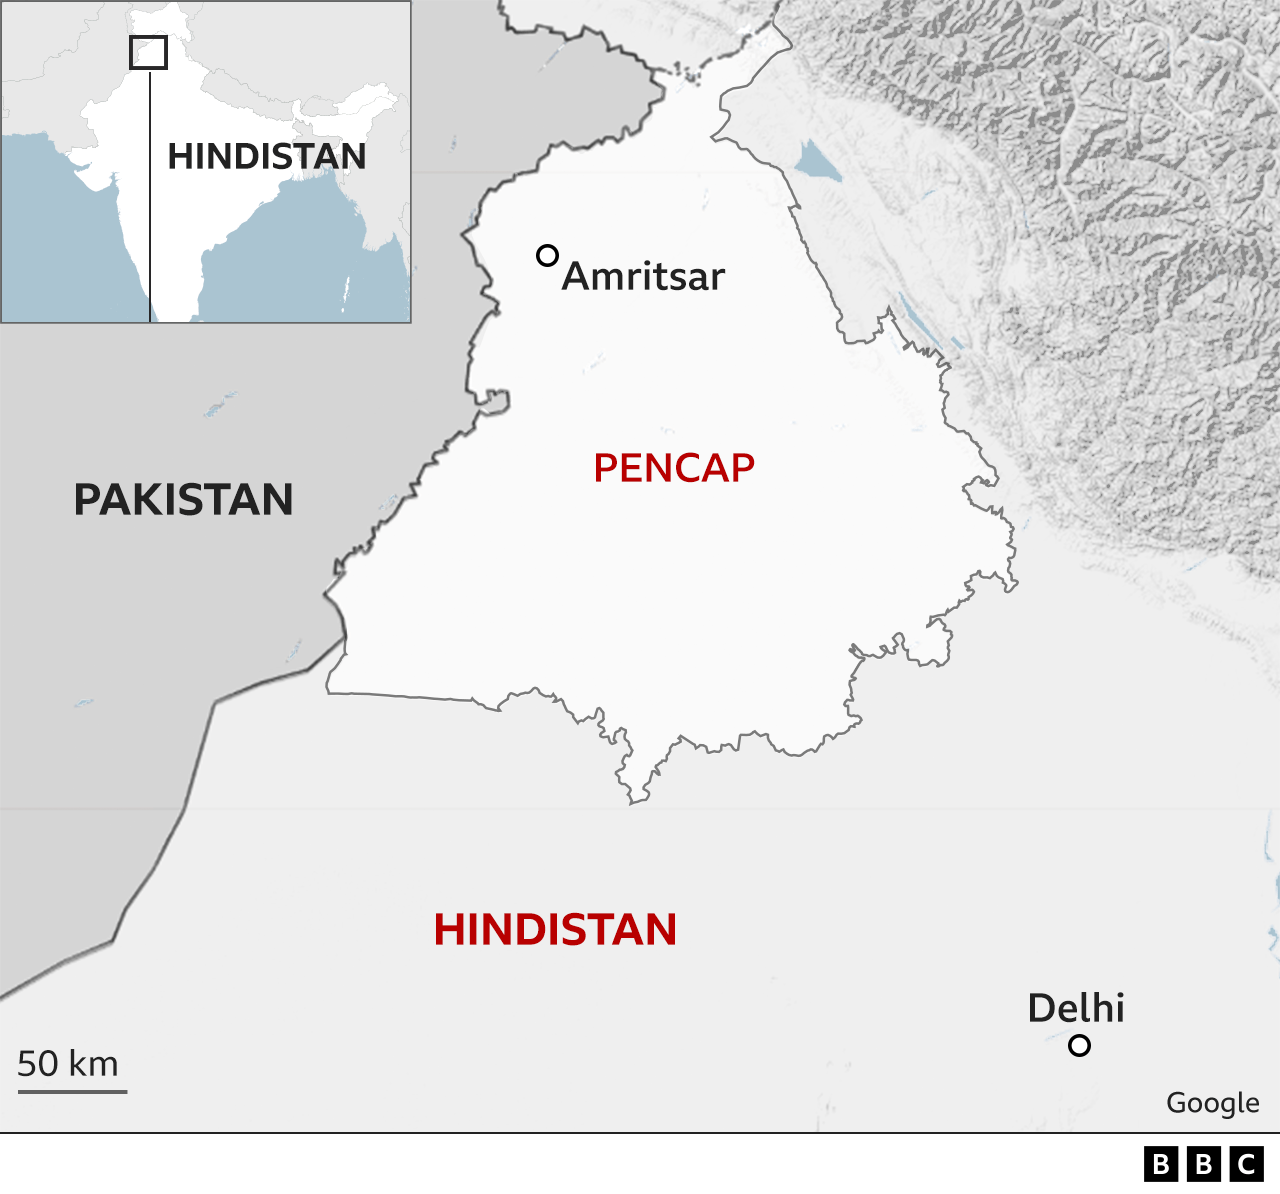 Hindistan-Pakistan-Pencap